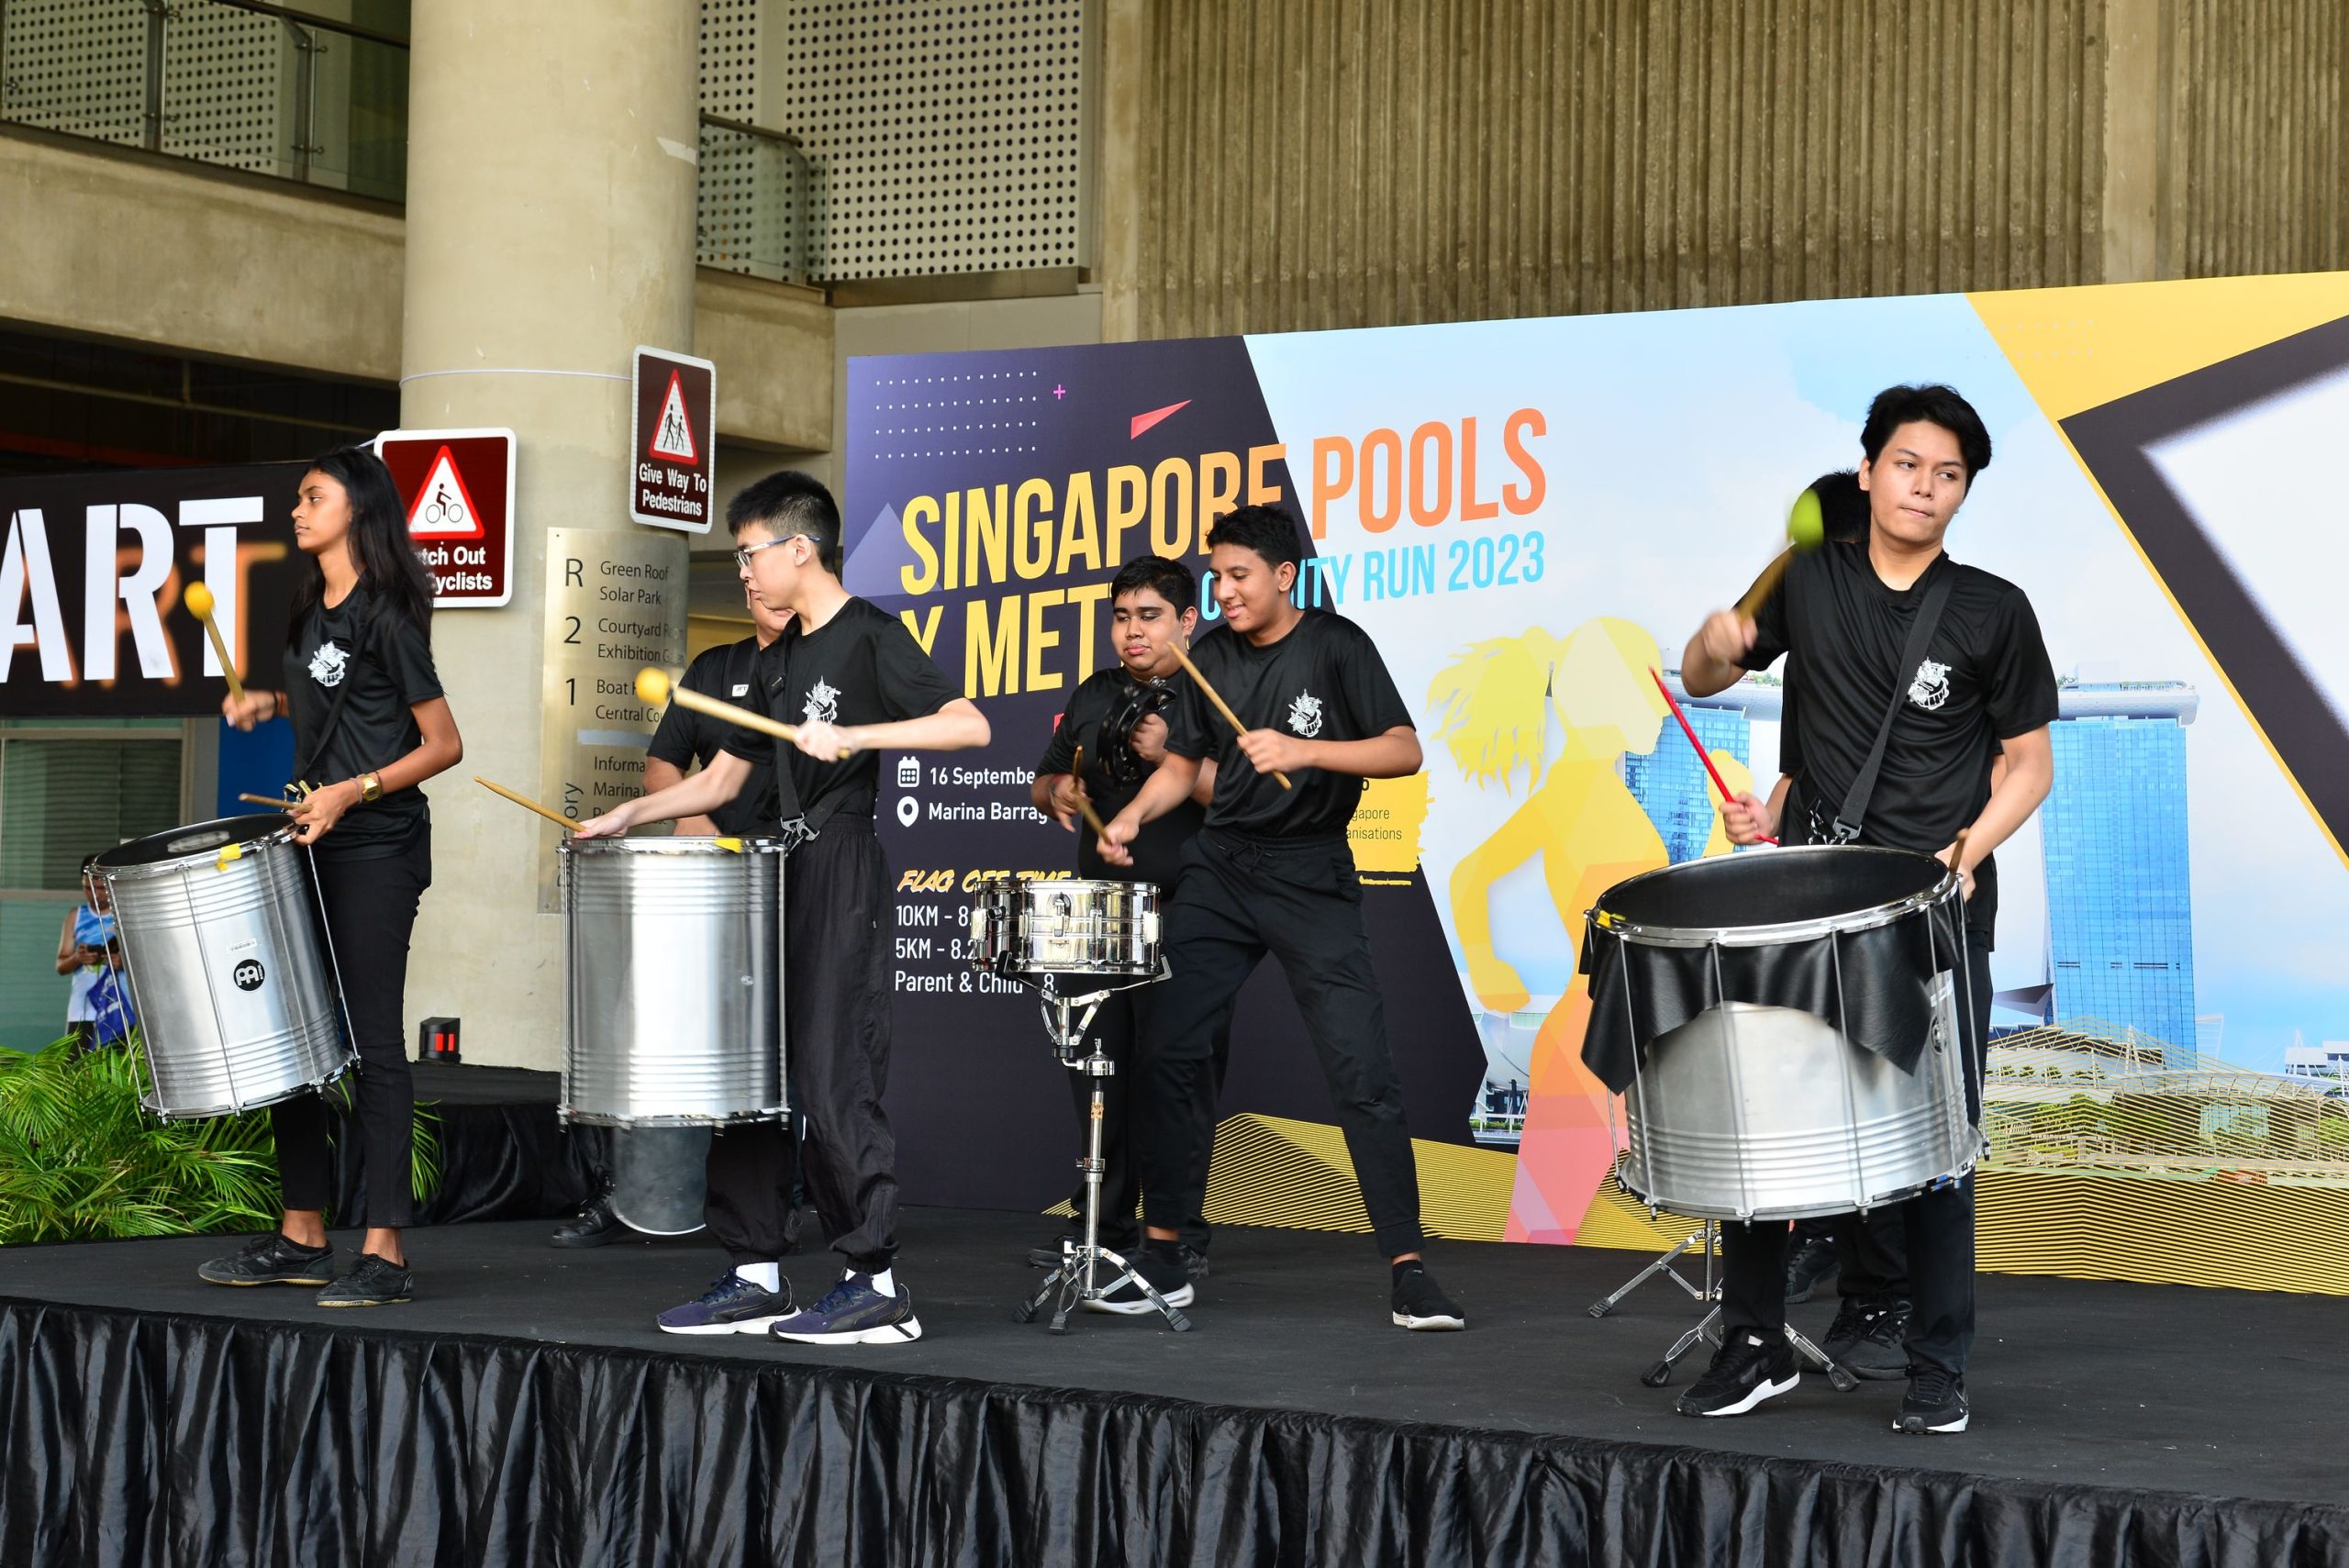 Singapore Pools x Metta Charity Run 2023